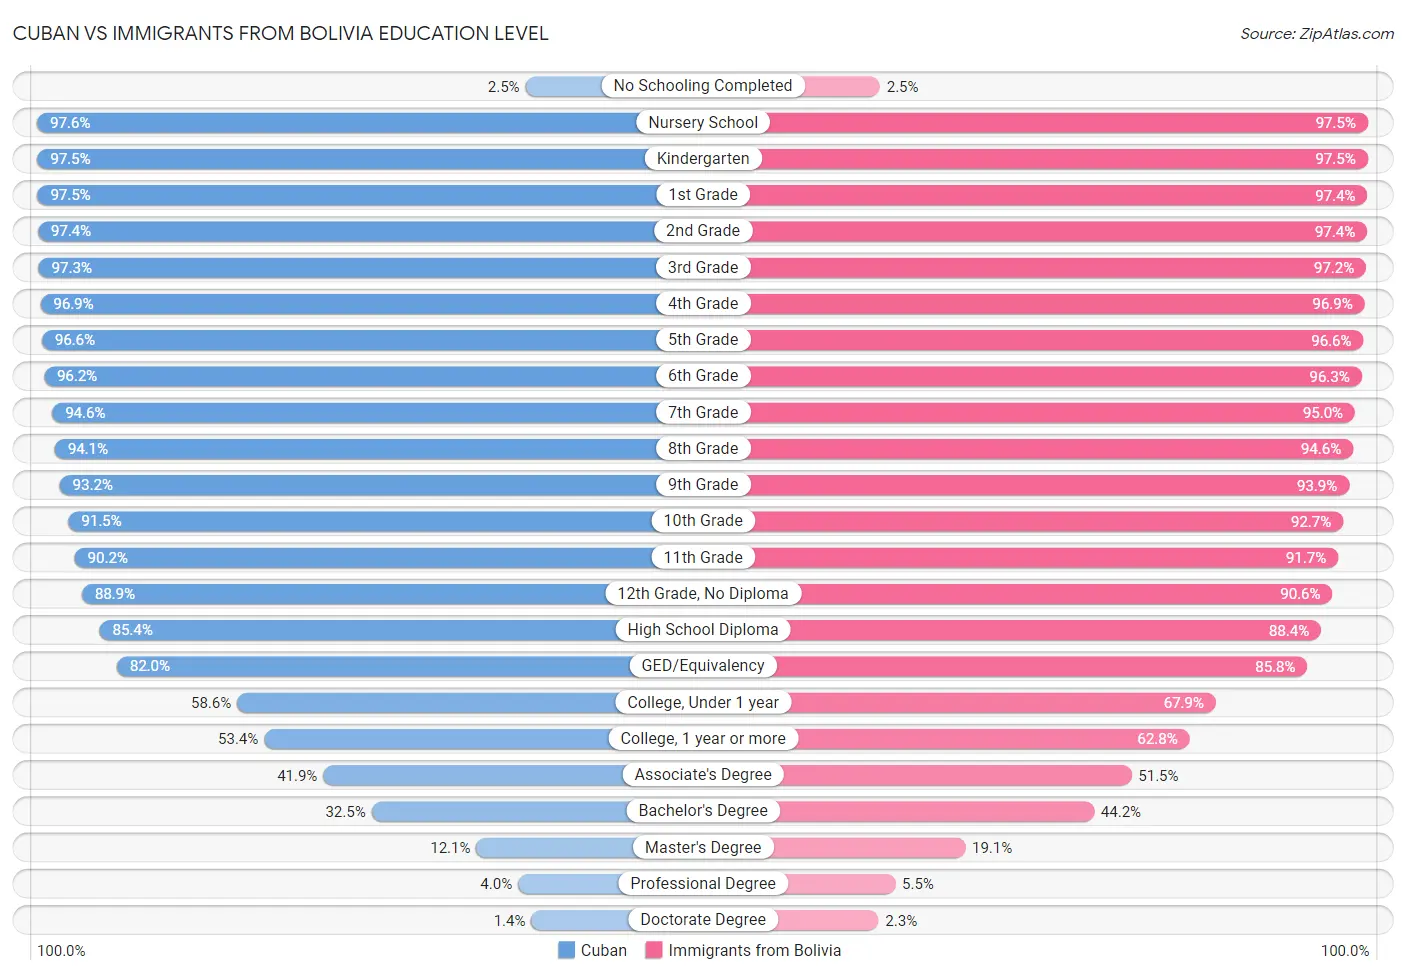 Cuban vs Immigrants from Bolivia Education Level